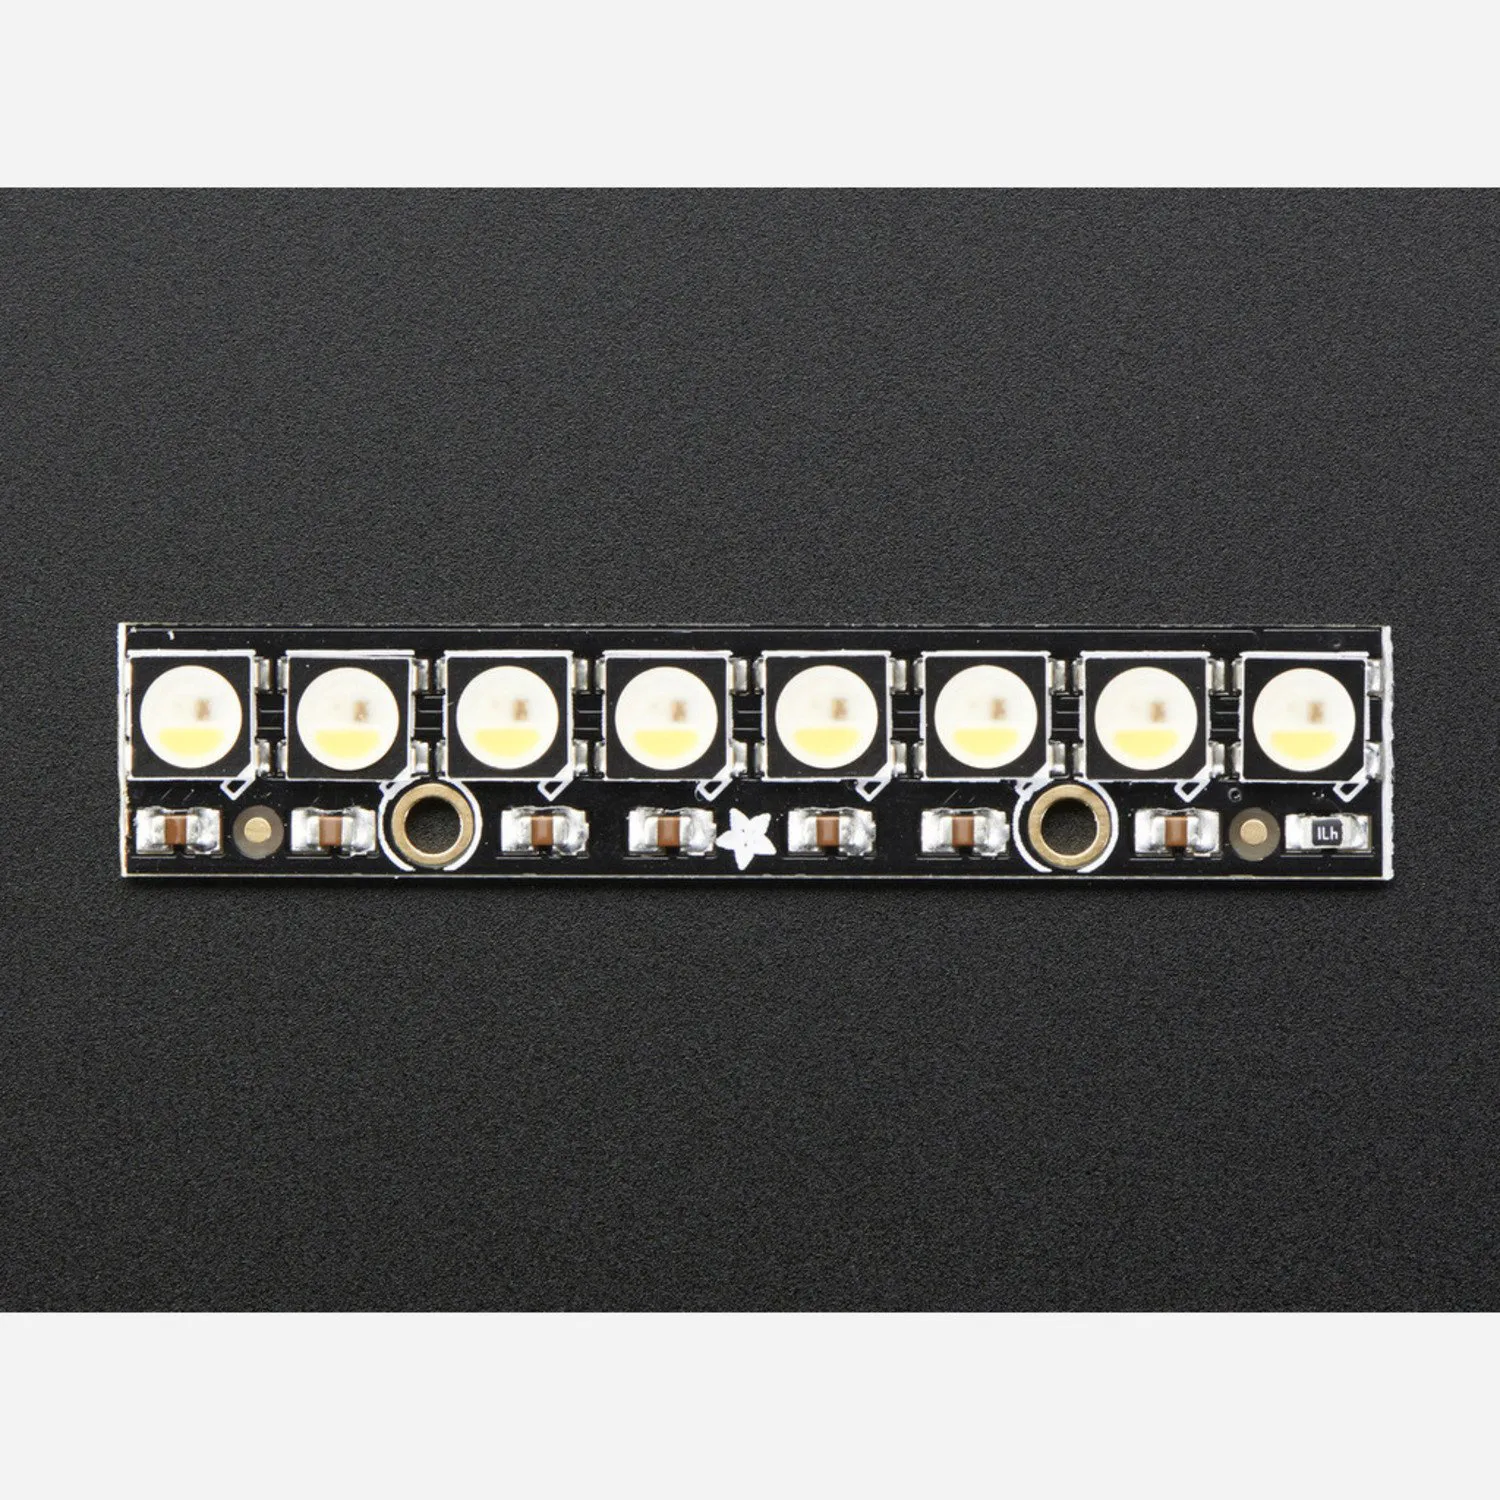 Photo of NeoPixel Stick - 8 x 5050 RGBW LEDs - Natural White - ~4500K